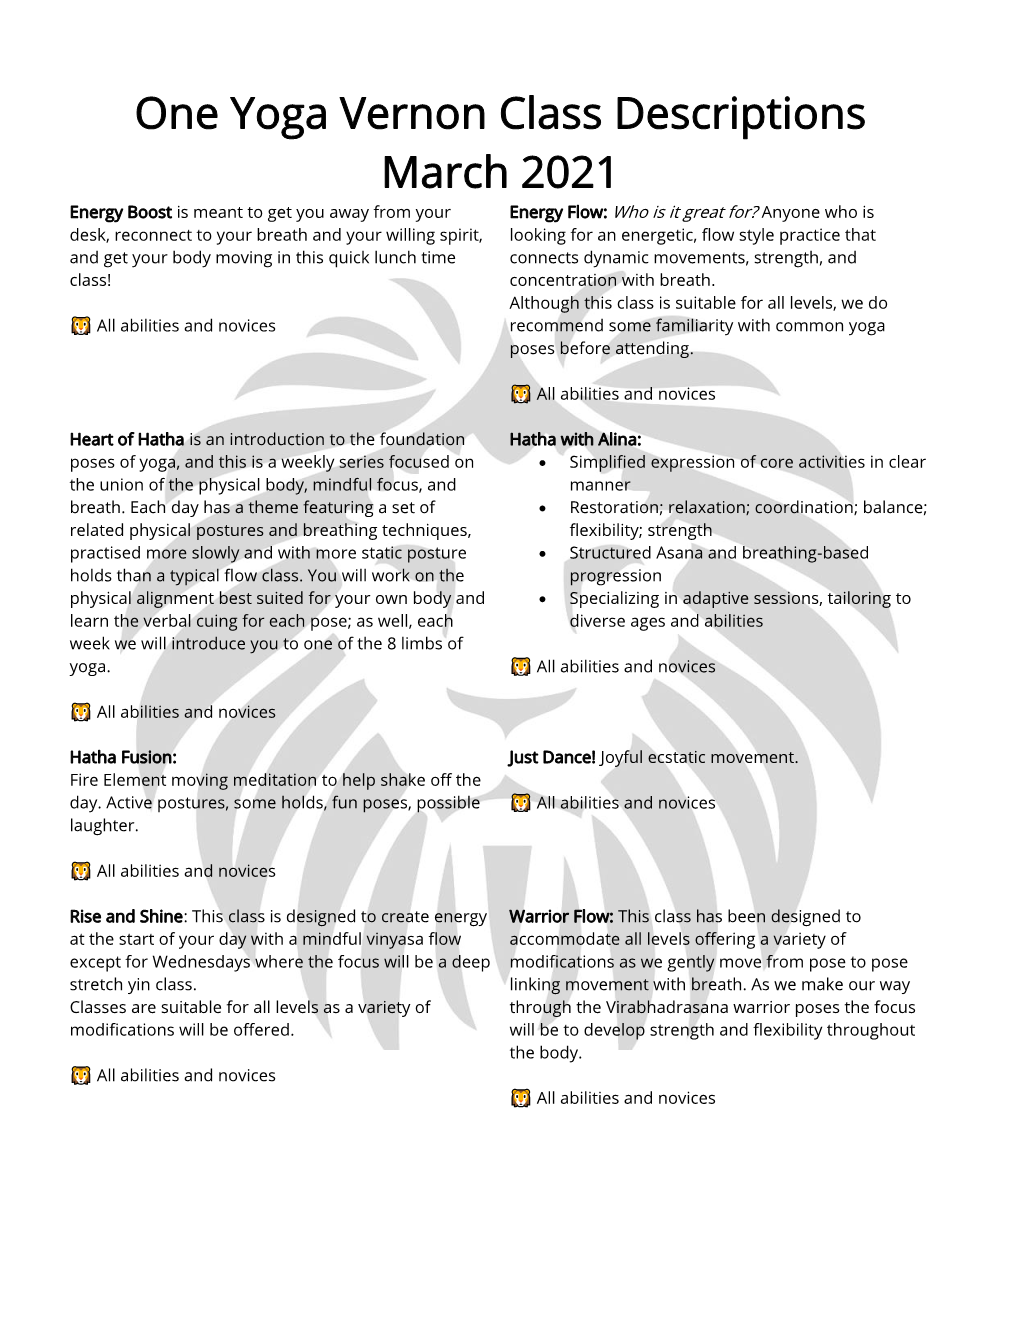 One Yoga Vernon Class Descriptions March 2021